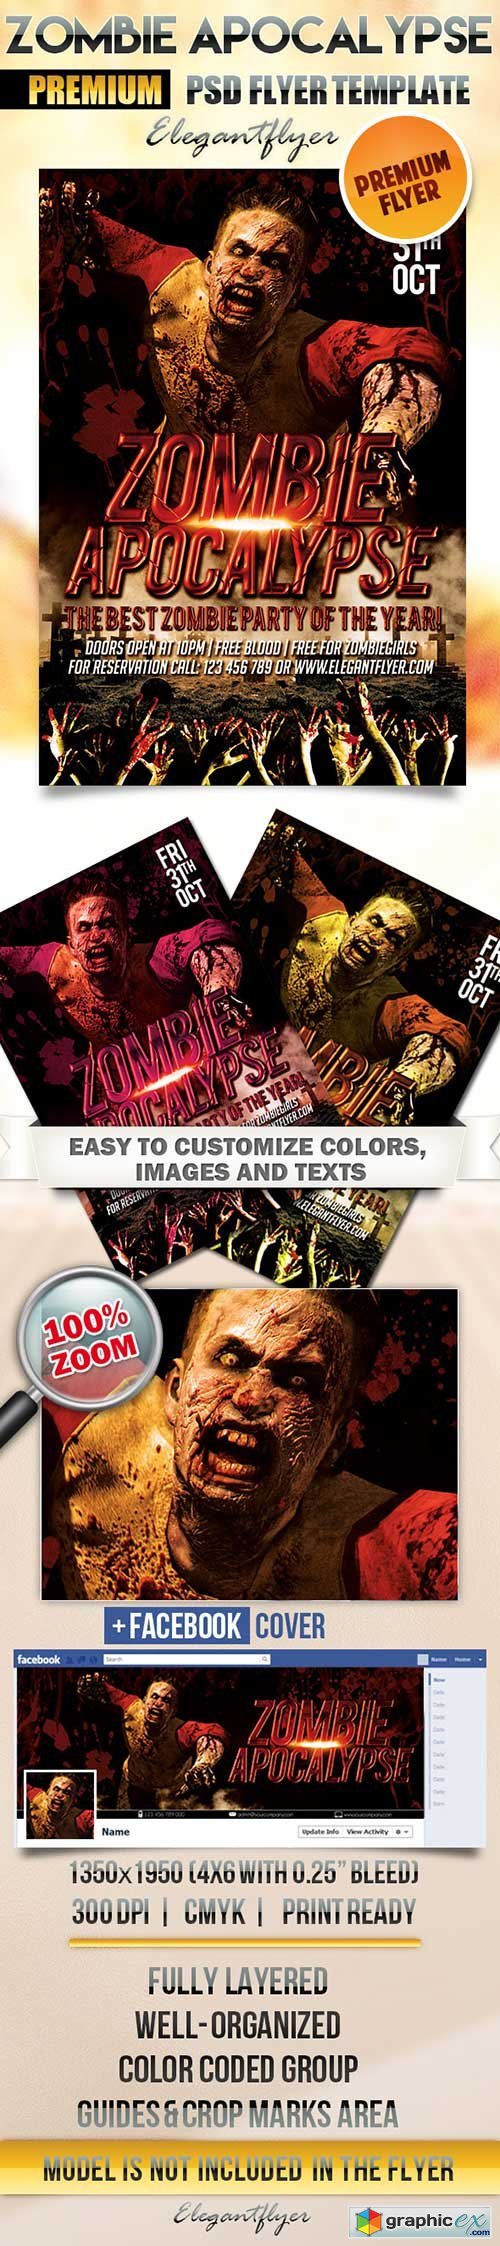 Zombie Apocalypse Flyer PSD Template + Facebook Cover